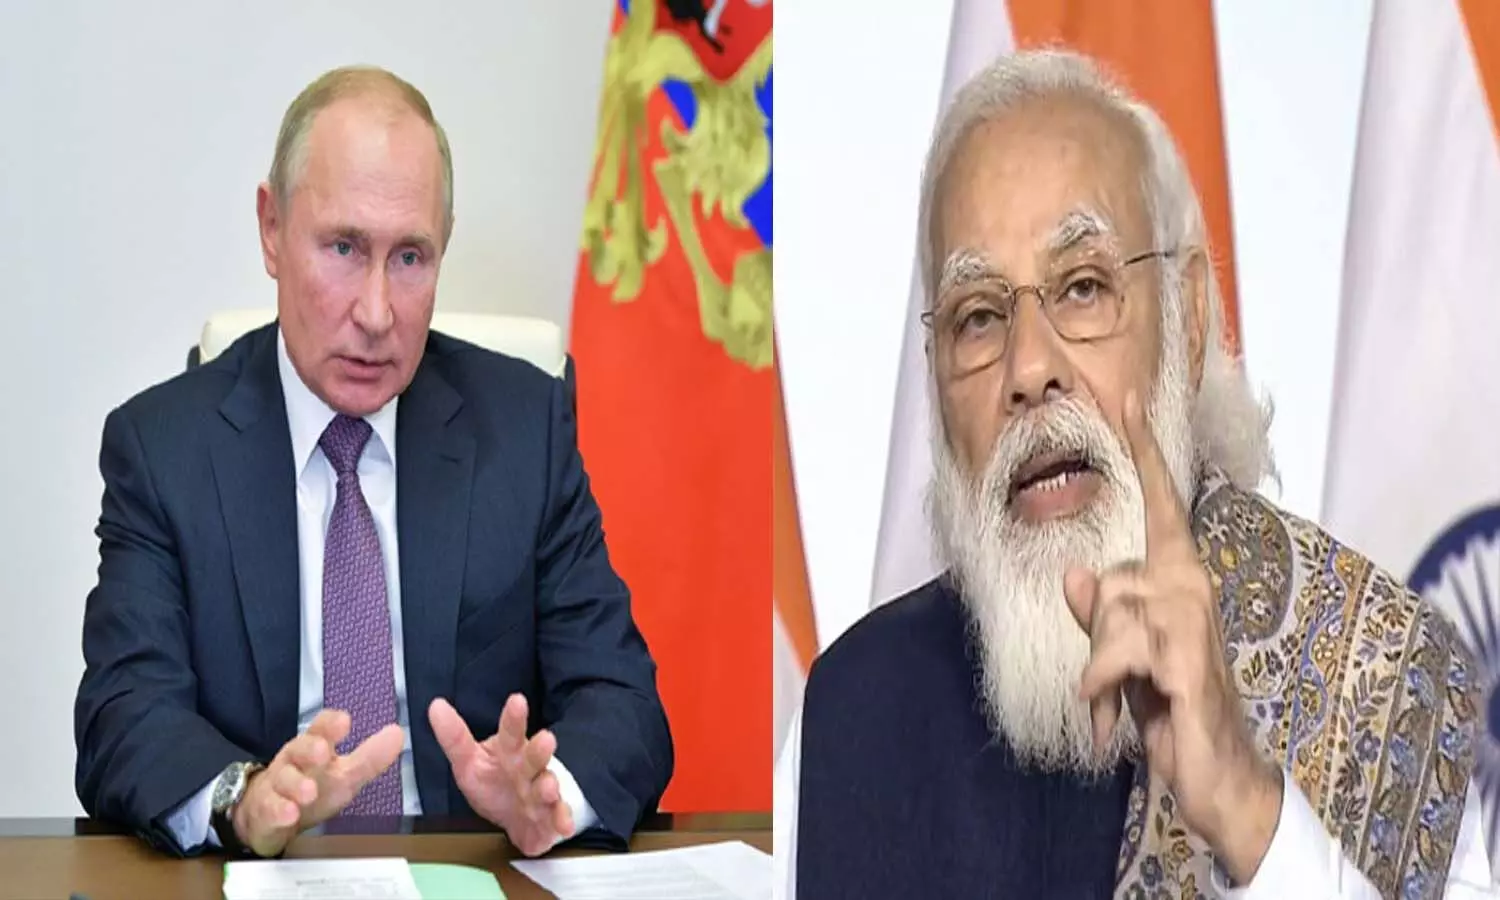 Talks between PM Modi and Putin on Afghanistan crisis